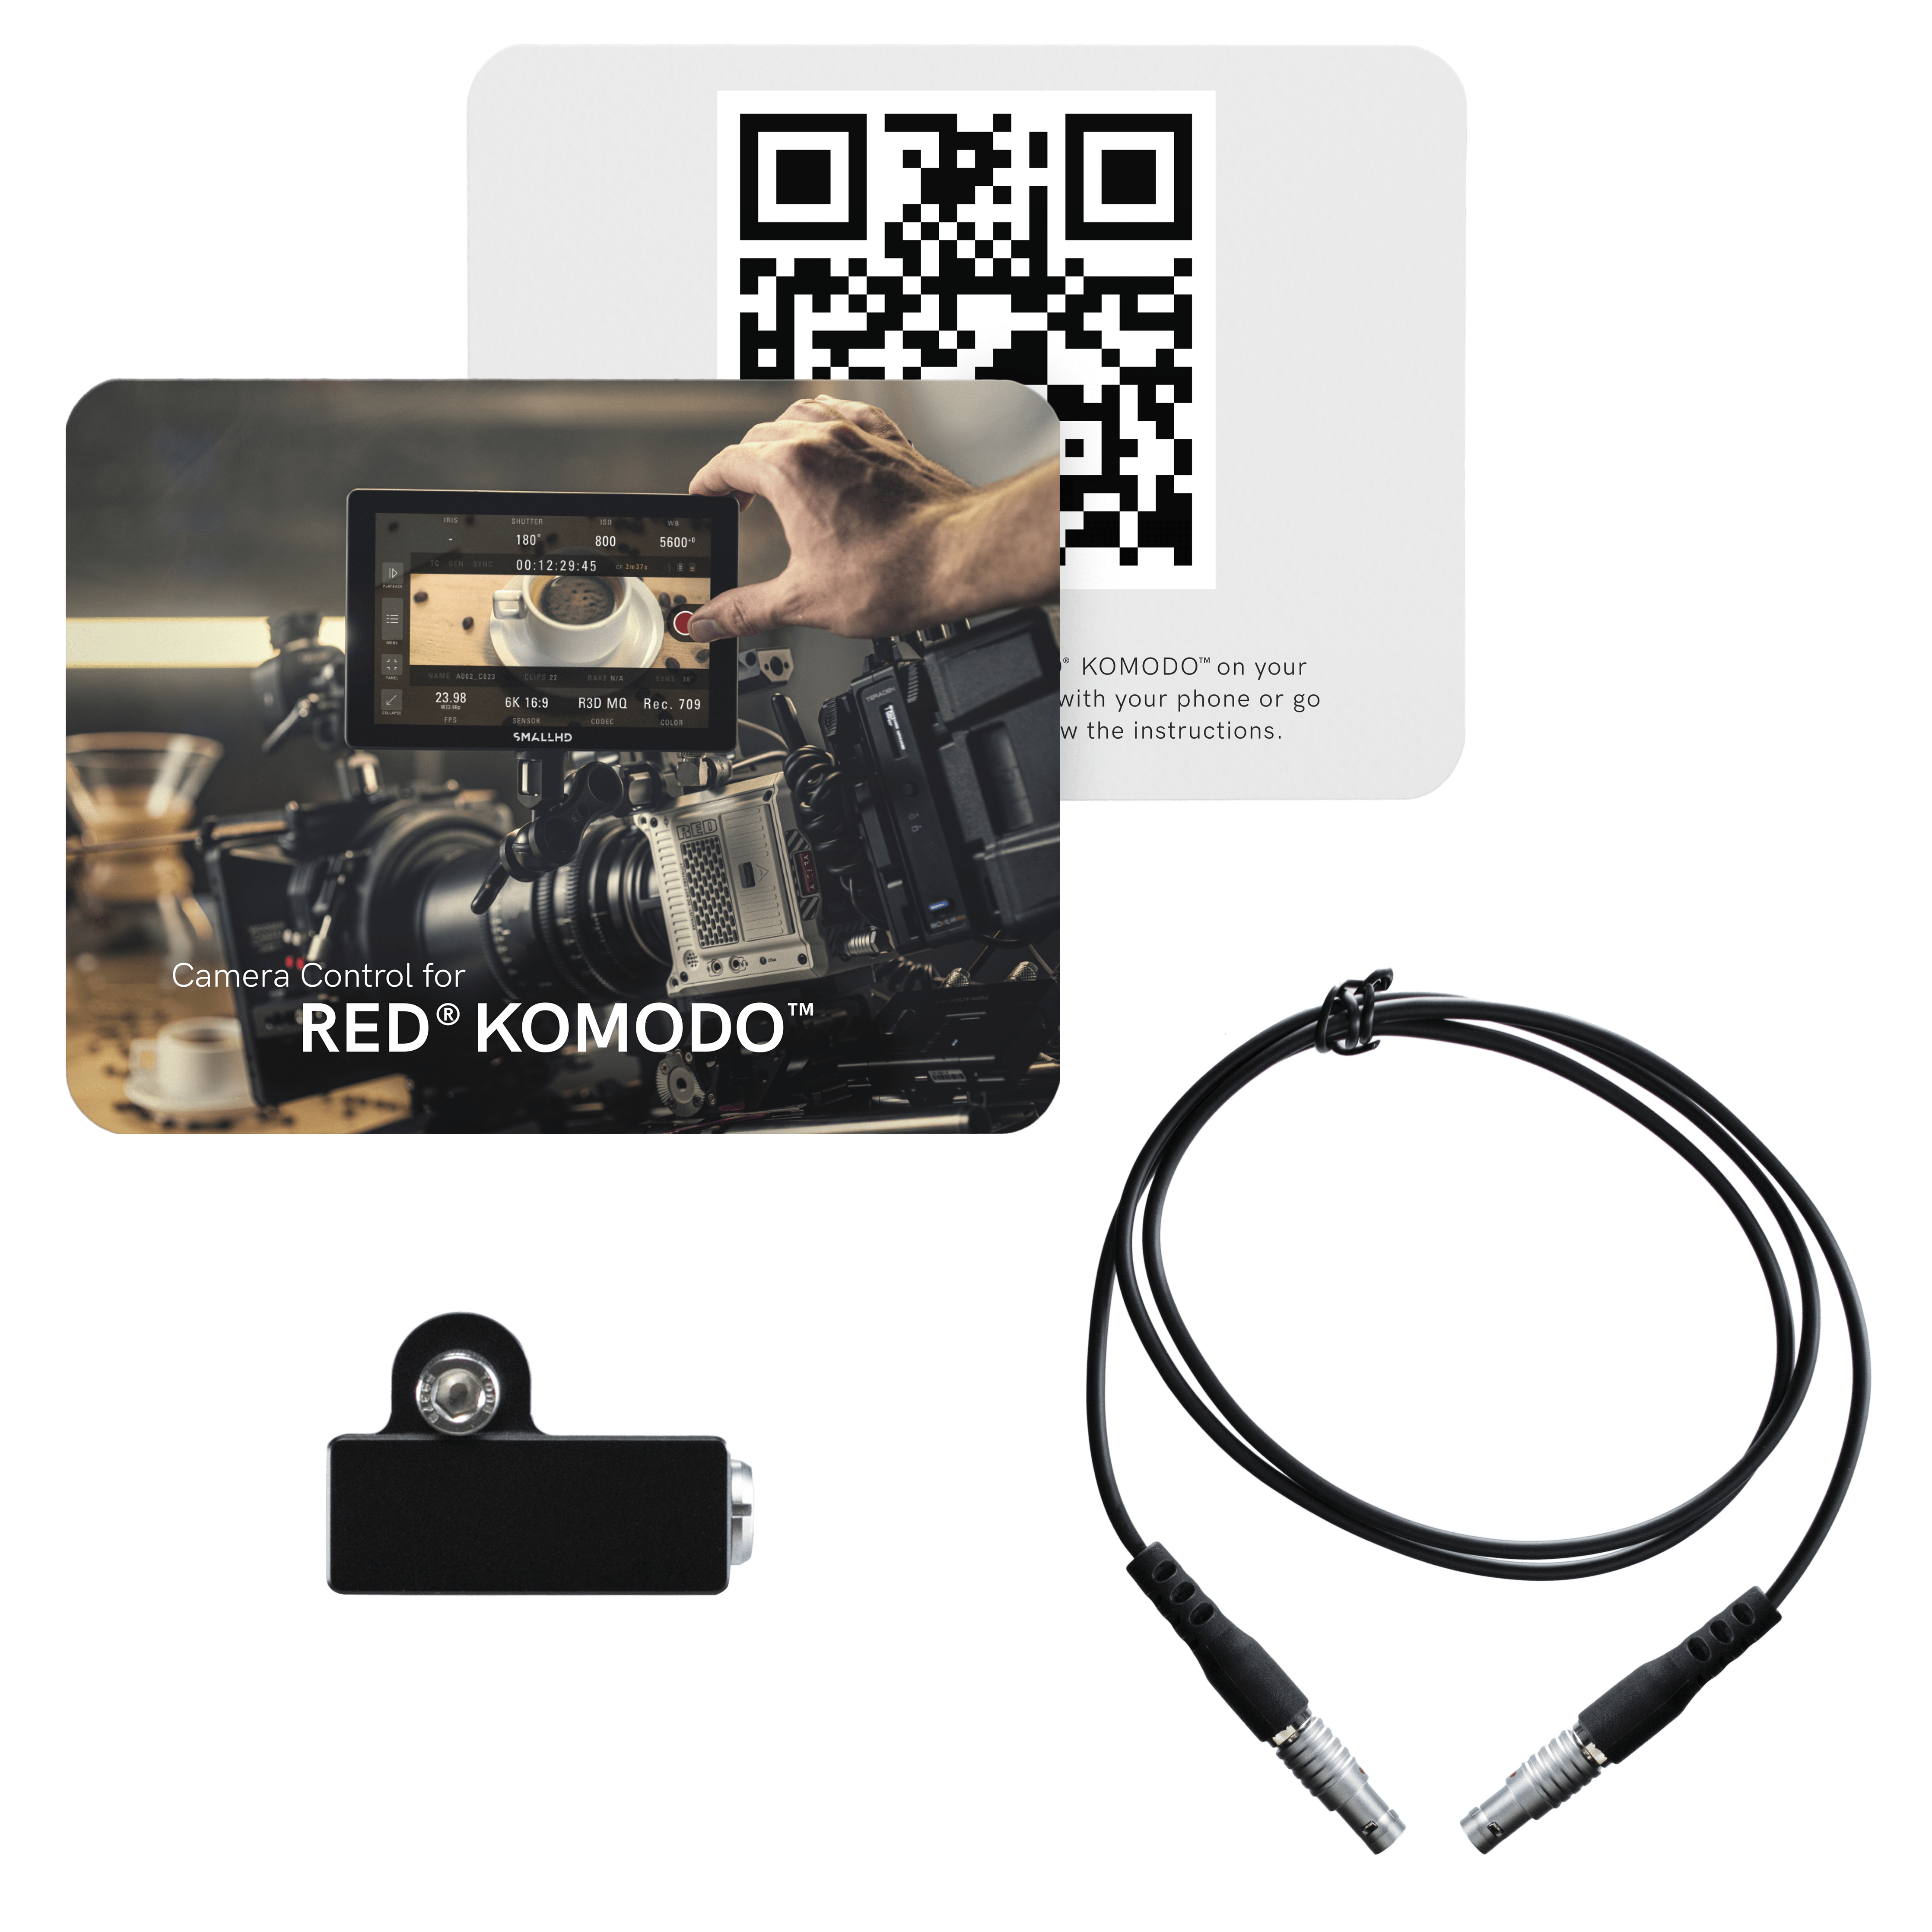 SmallHD Cine 7 Smart Monitor with Camera Control for RED® KOMODO™